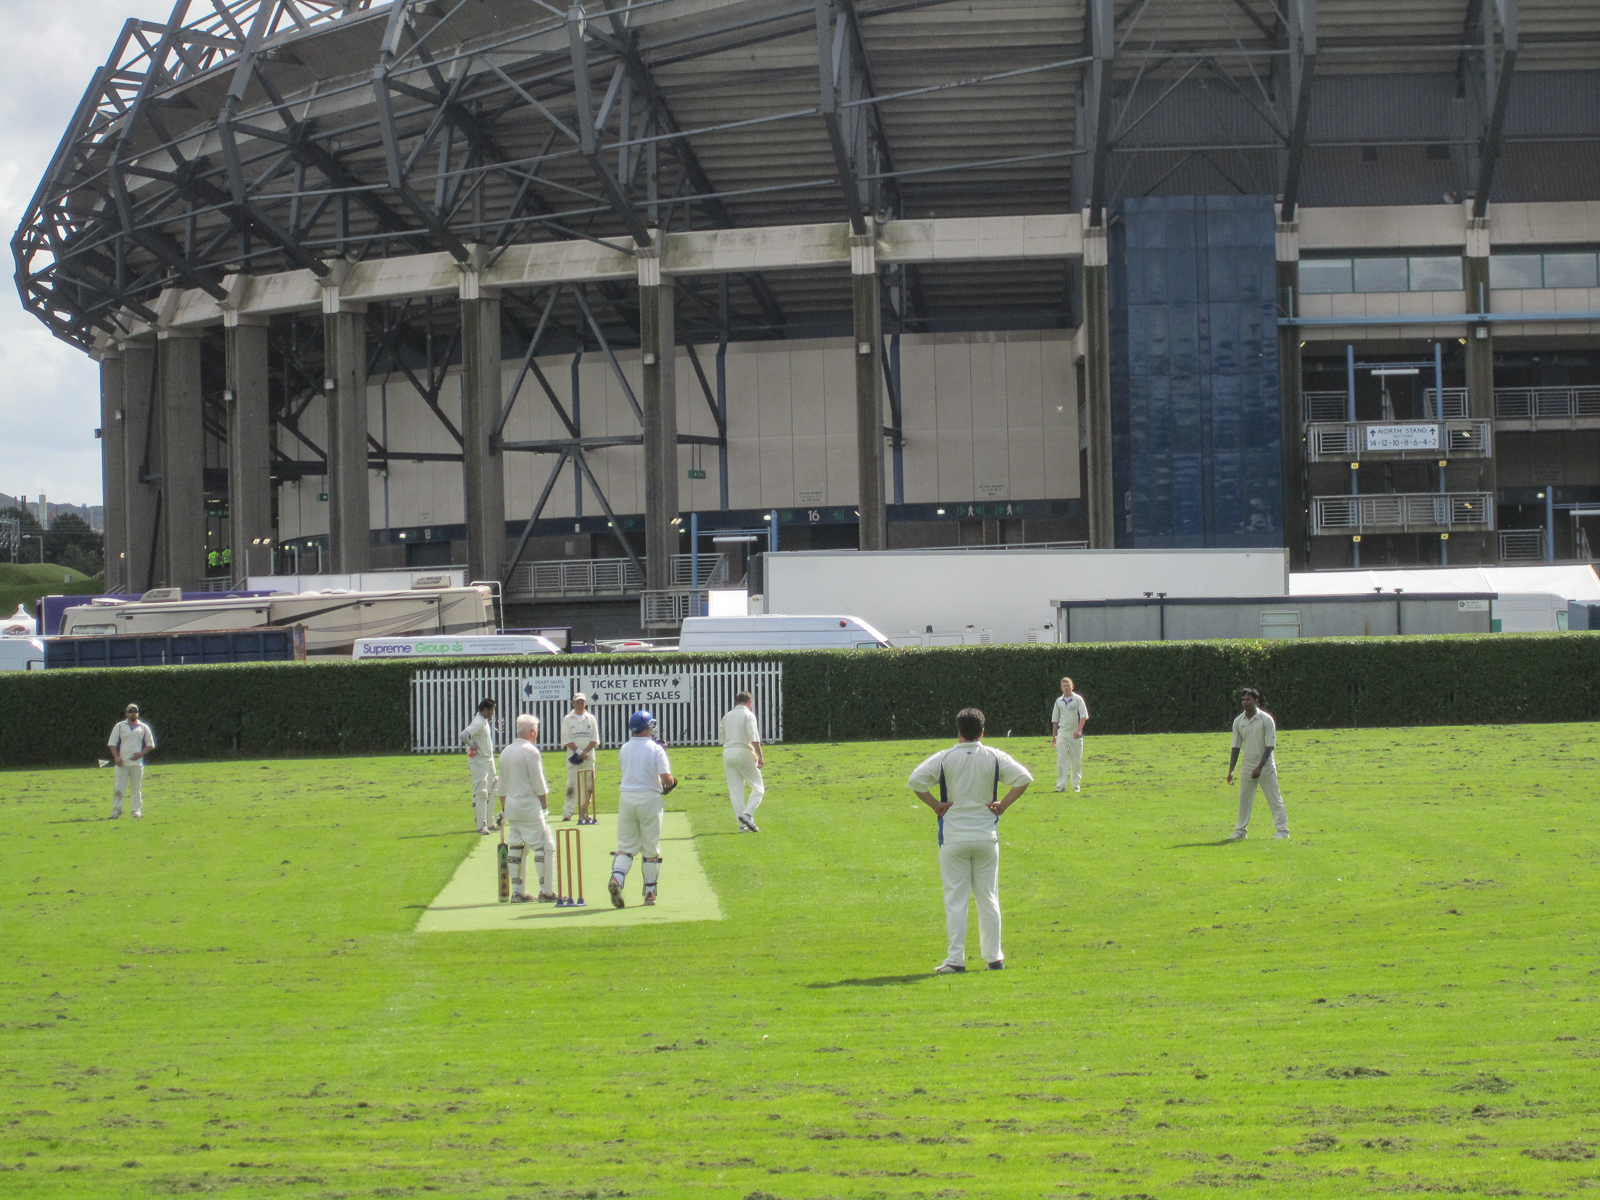 cricket at murrayfield